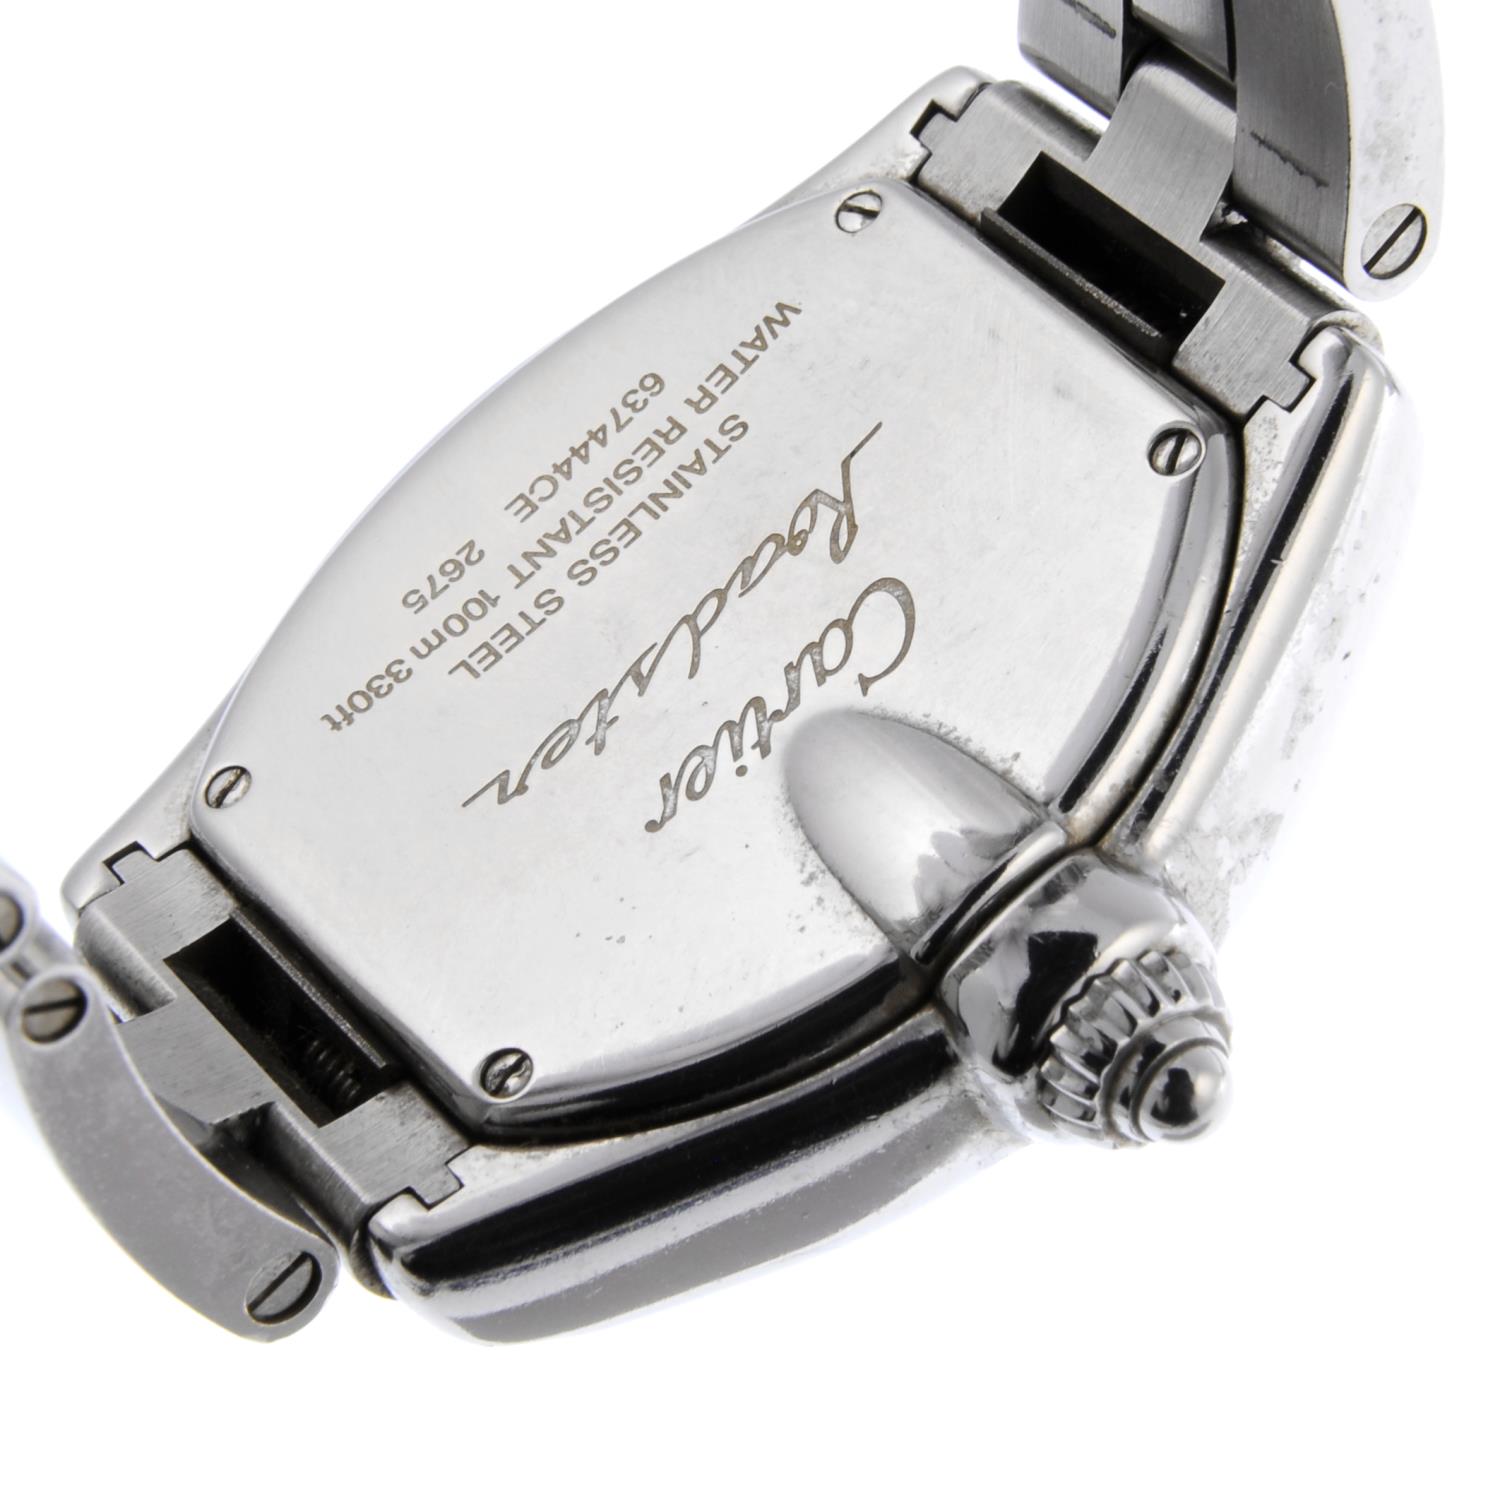 CARTIER - a mid-size Roadster bracelet watch. - Image 4 of 4